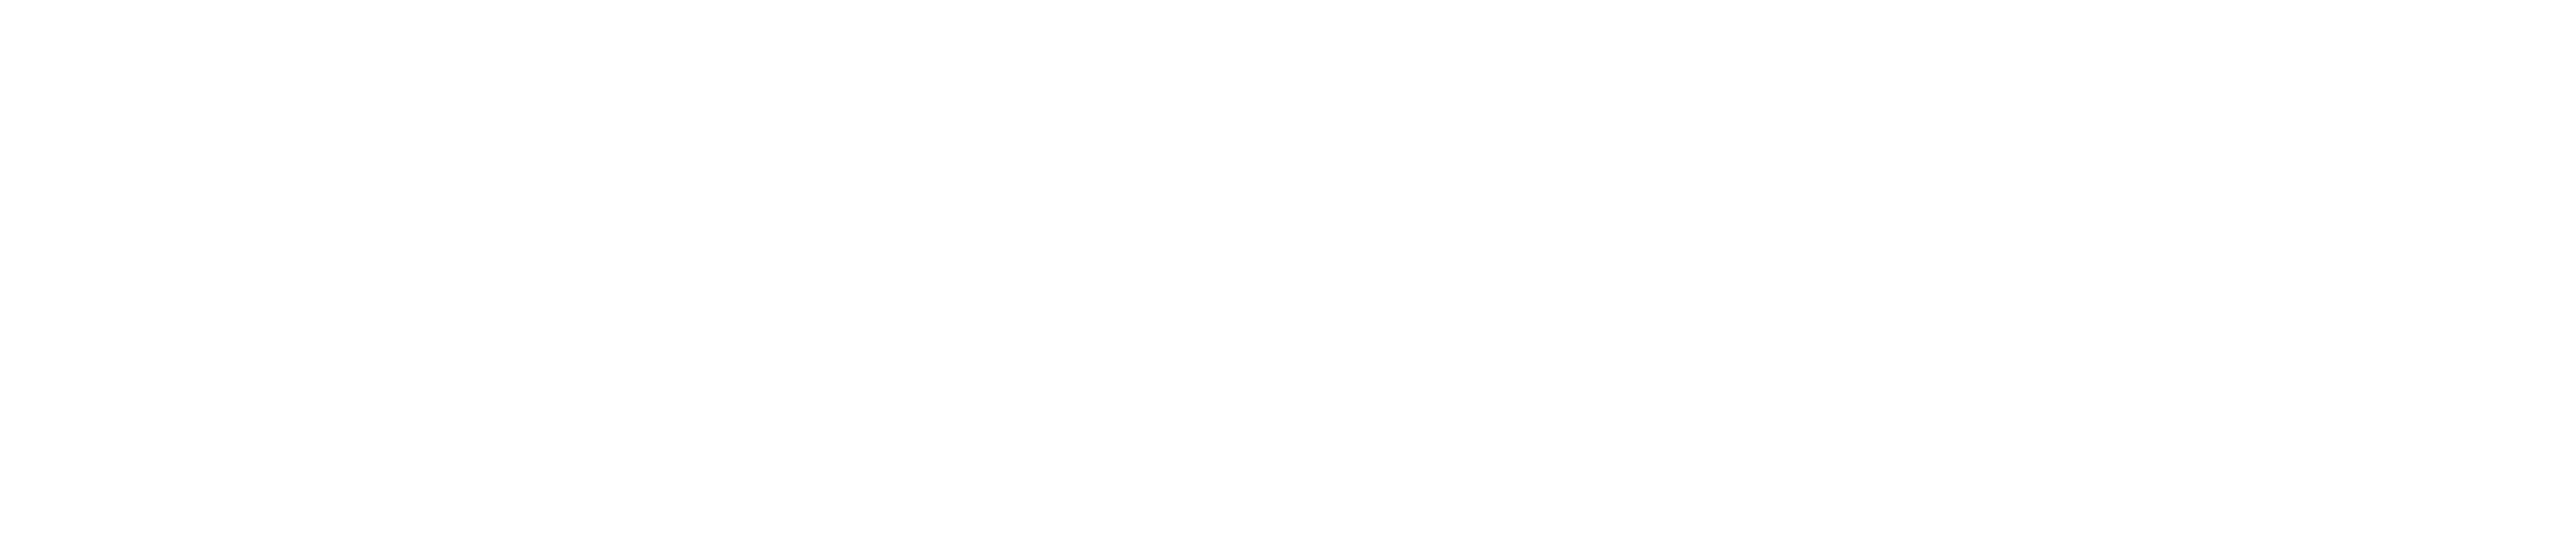 Prud_logo_wht